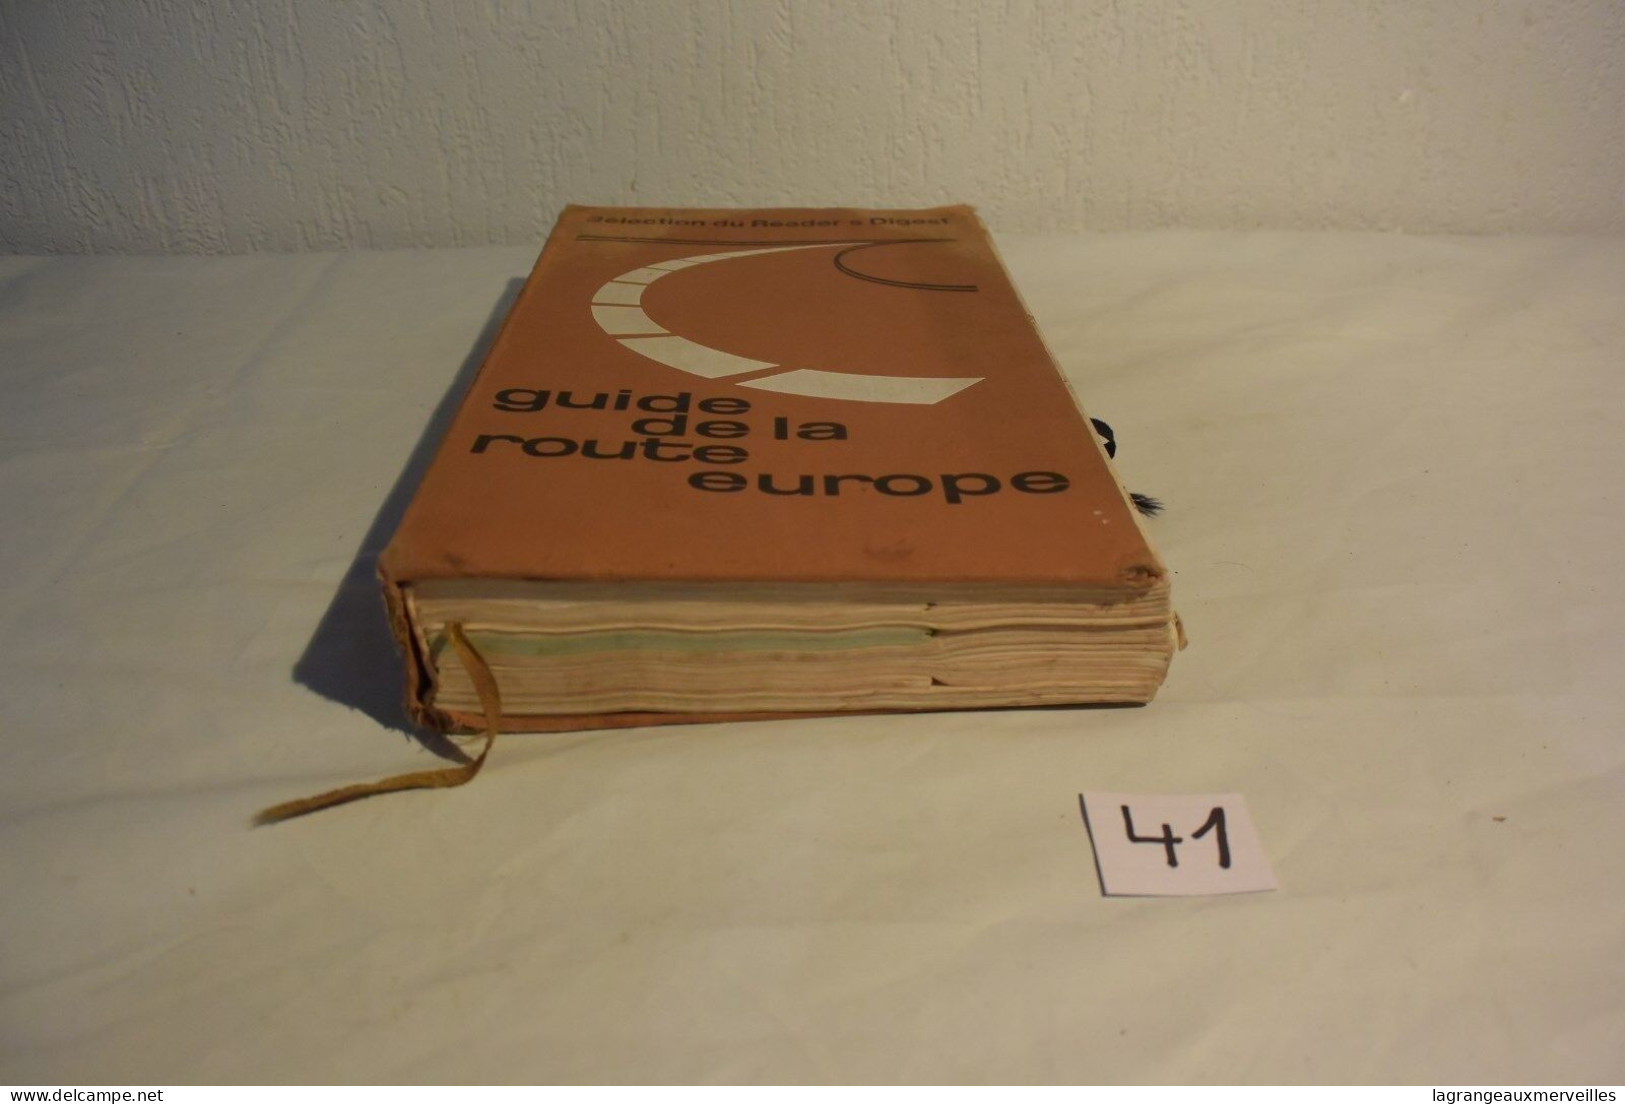 C41 Ancien Guide De La Route En Europe En 1969 - Karten/Atlanten